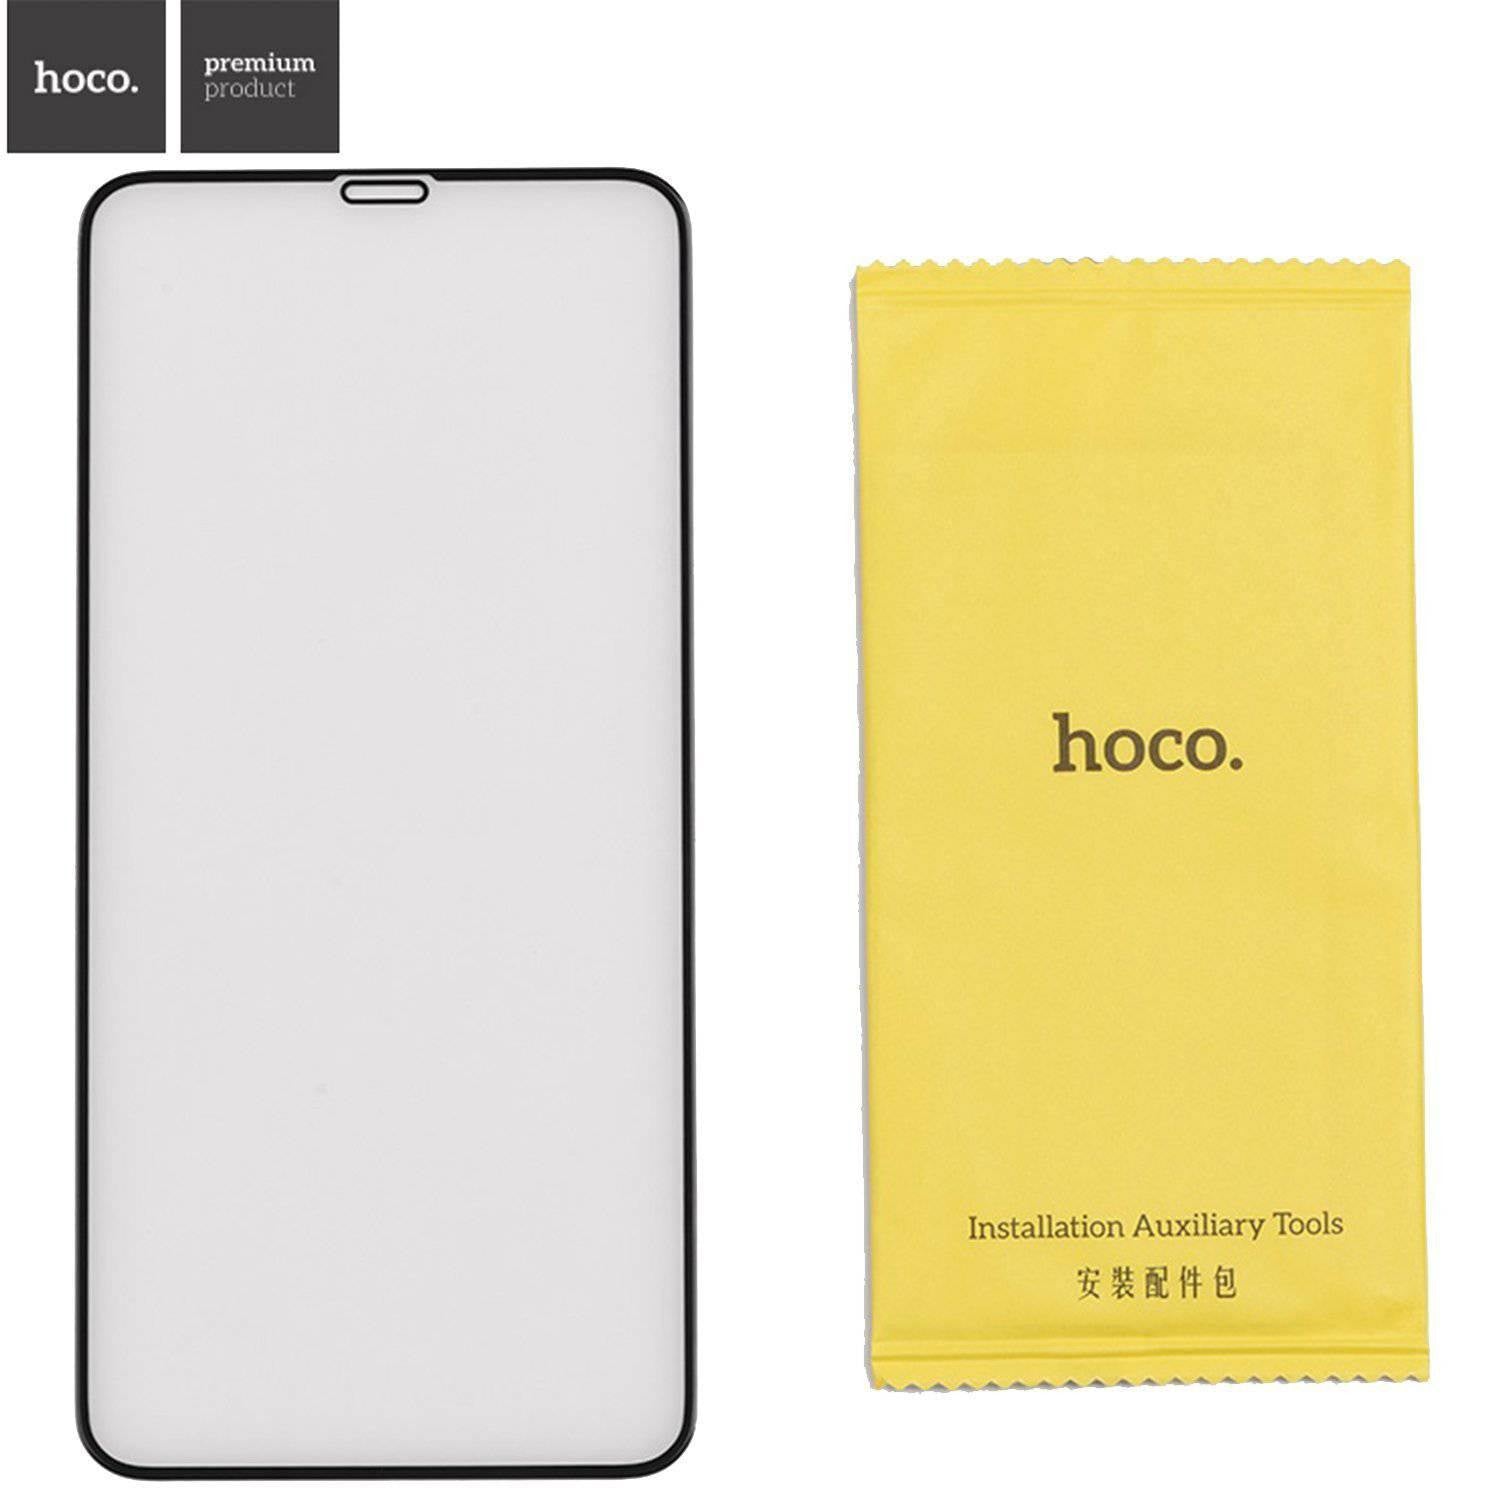 hoco. iPhone 11 screen protector | Shopna Online Store .